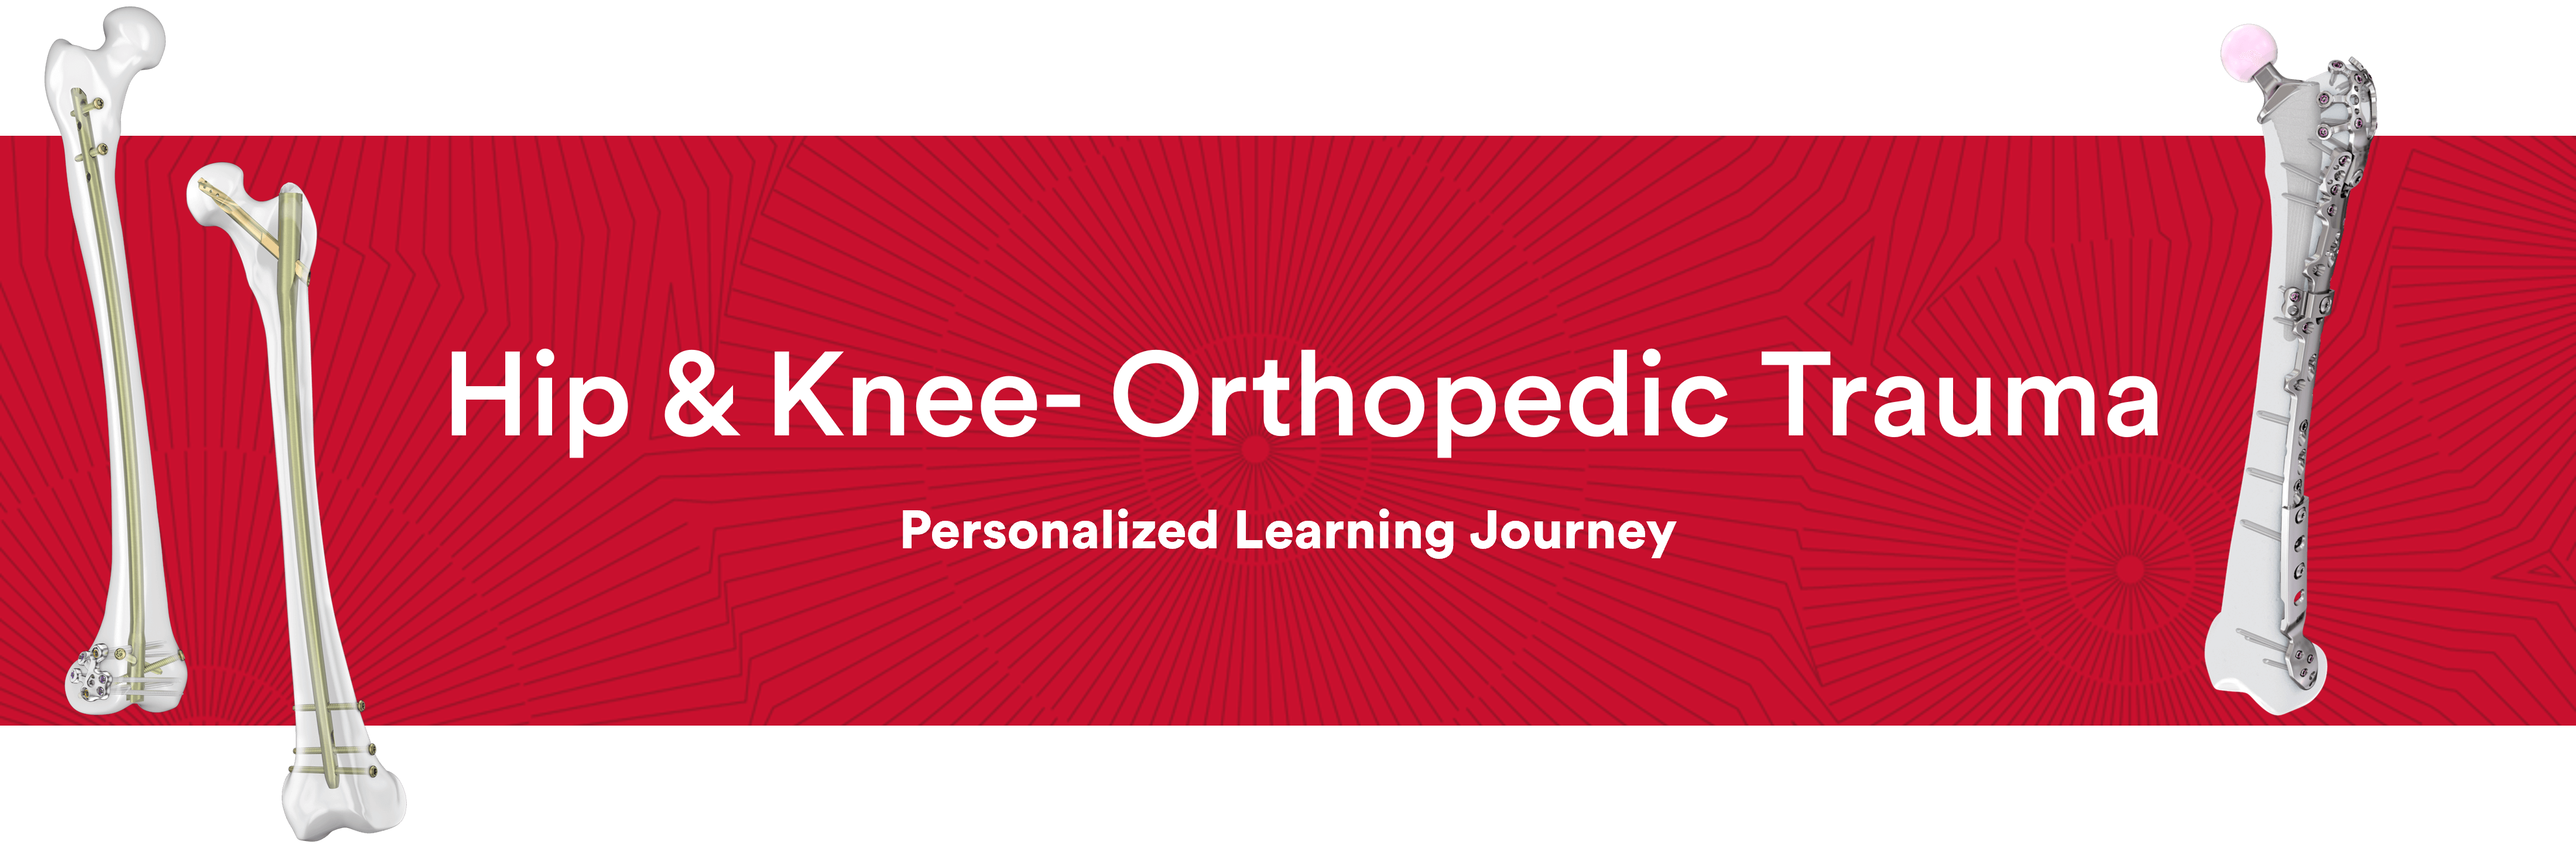 Hip and Knee Orthopaedic Trauma Banner Image